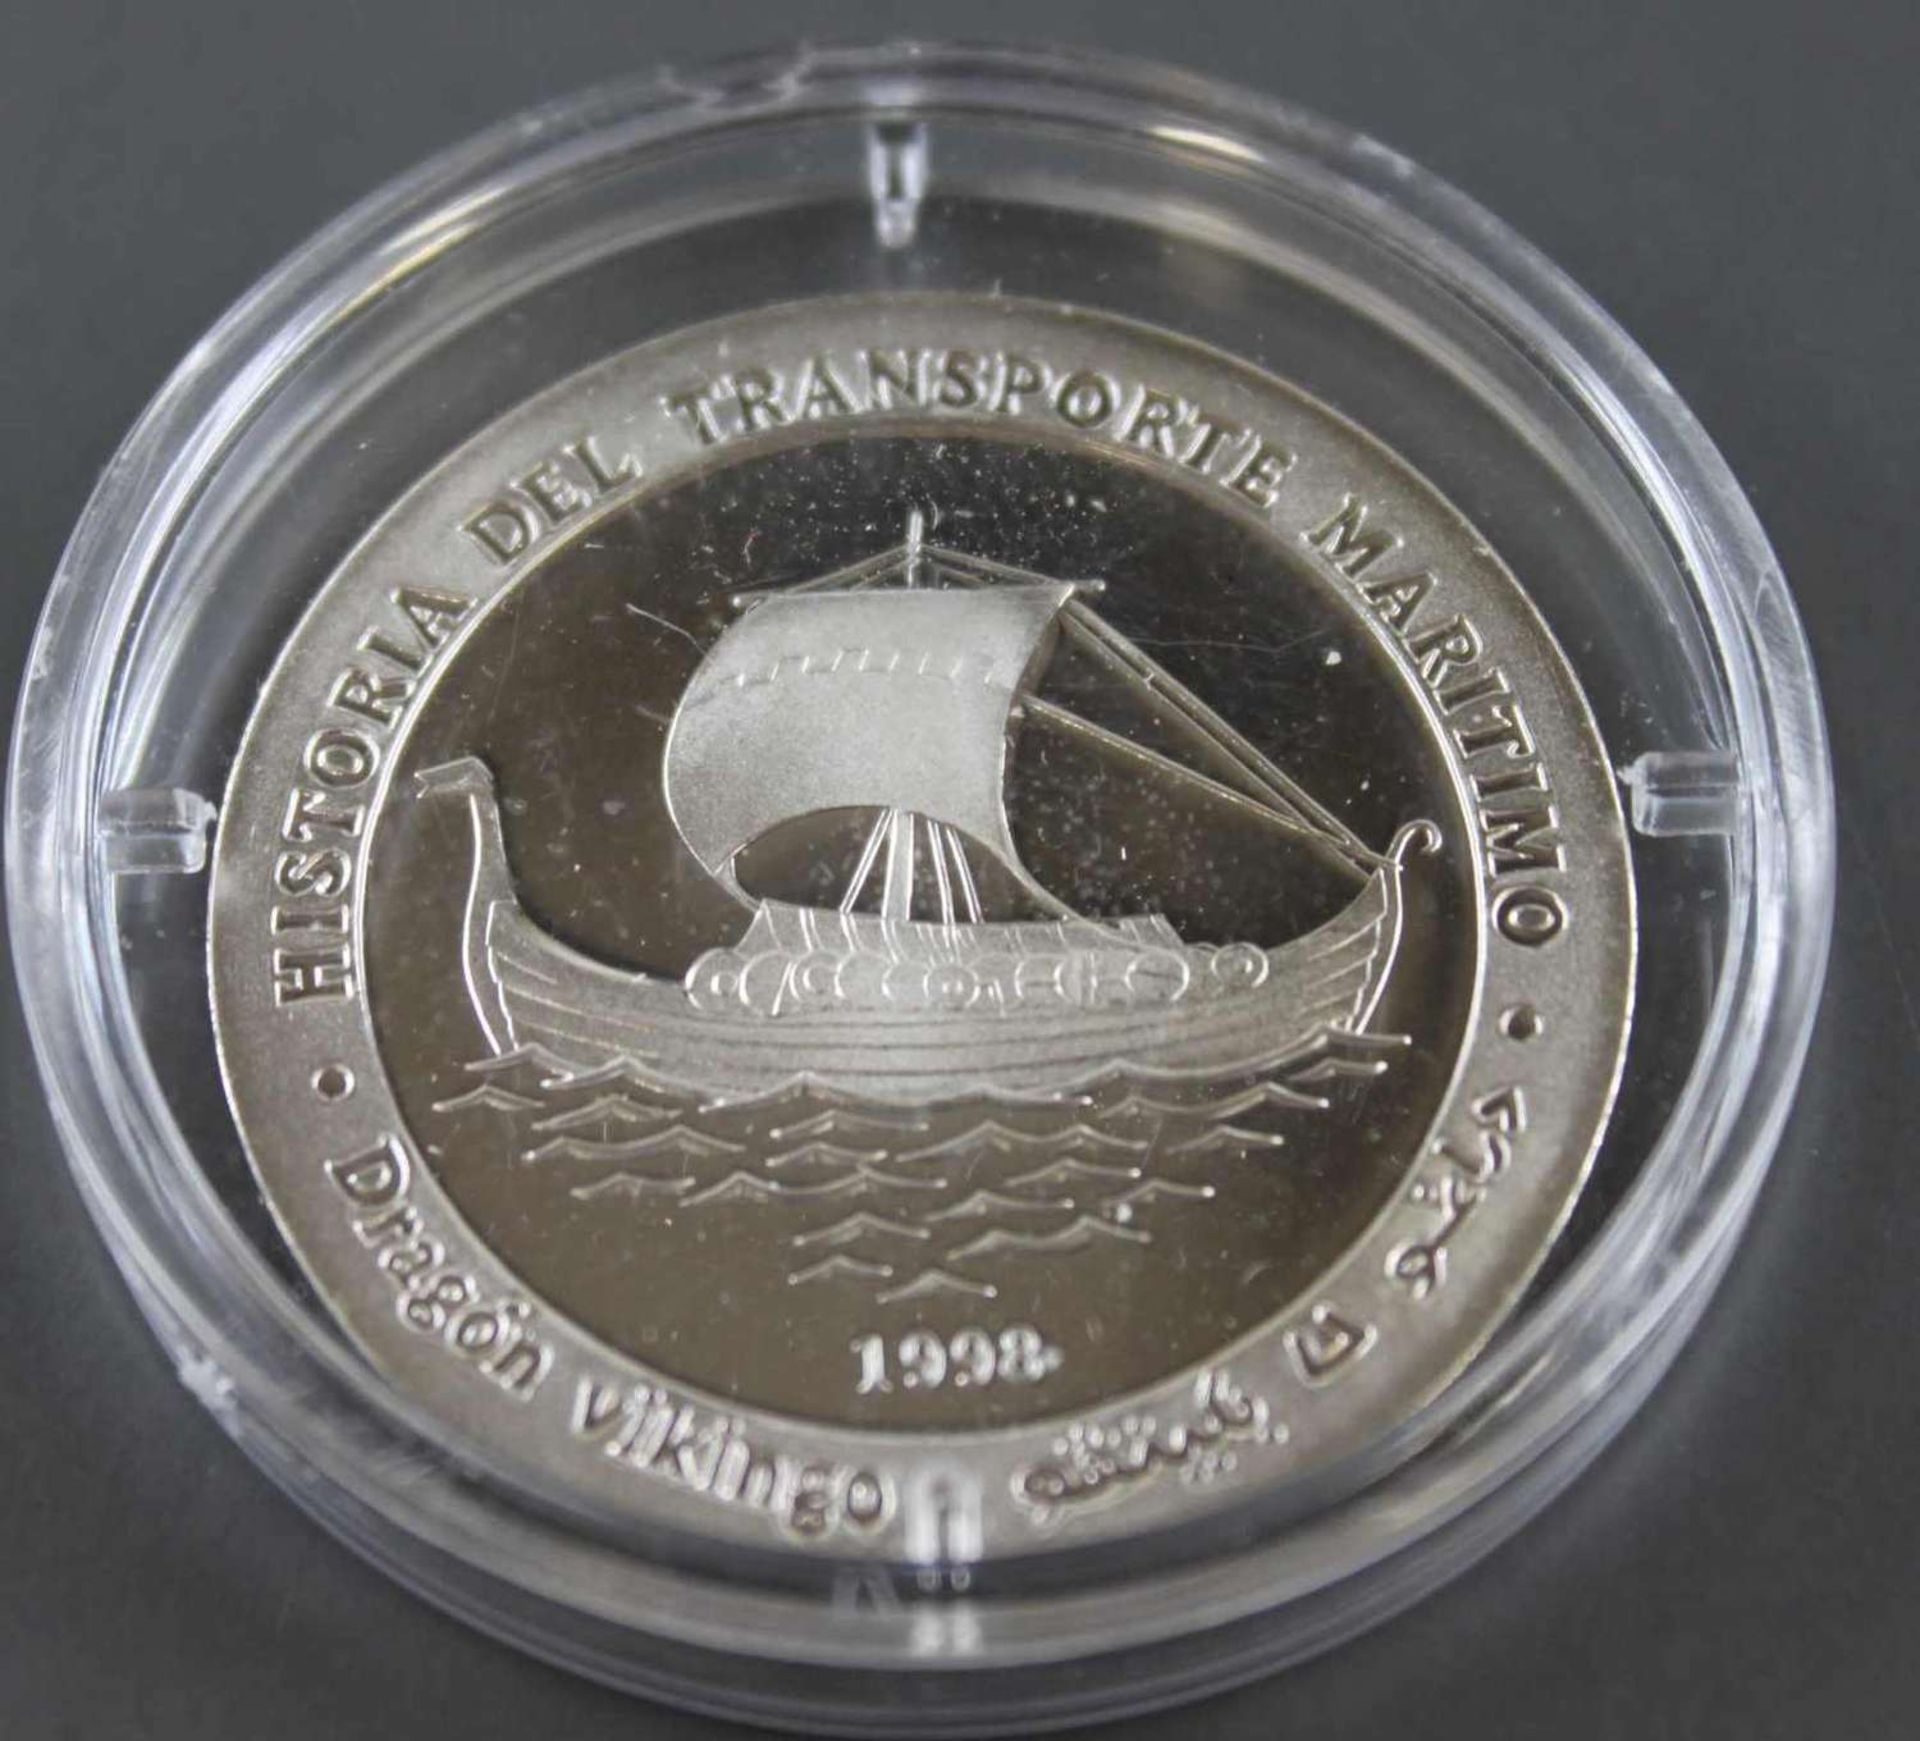 Republik Sahara 1998, 1000 Pesetas - Silbermünze "Wikinger - Schiff". Silber 999, Gewicht: 15 g,